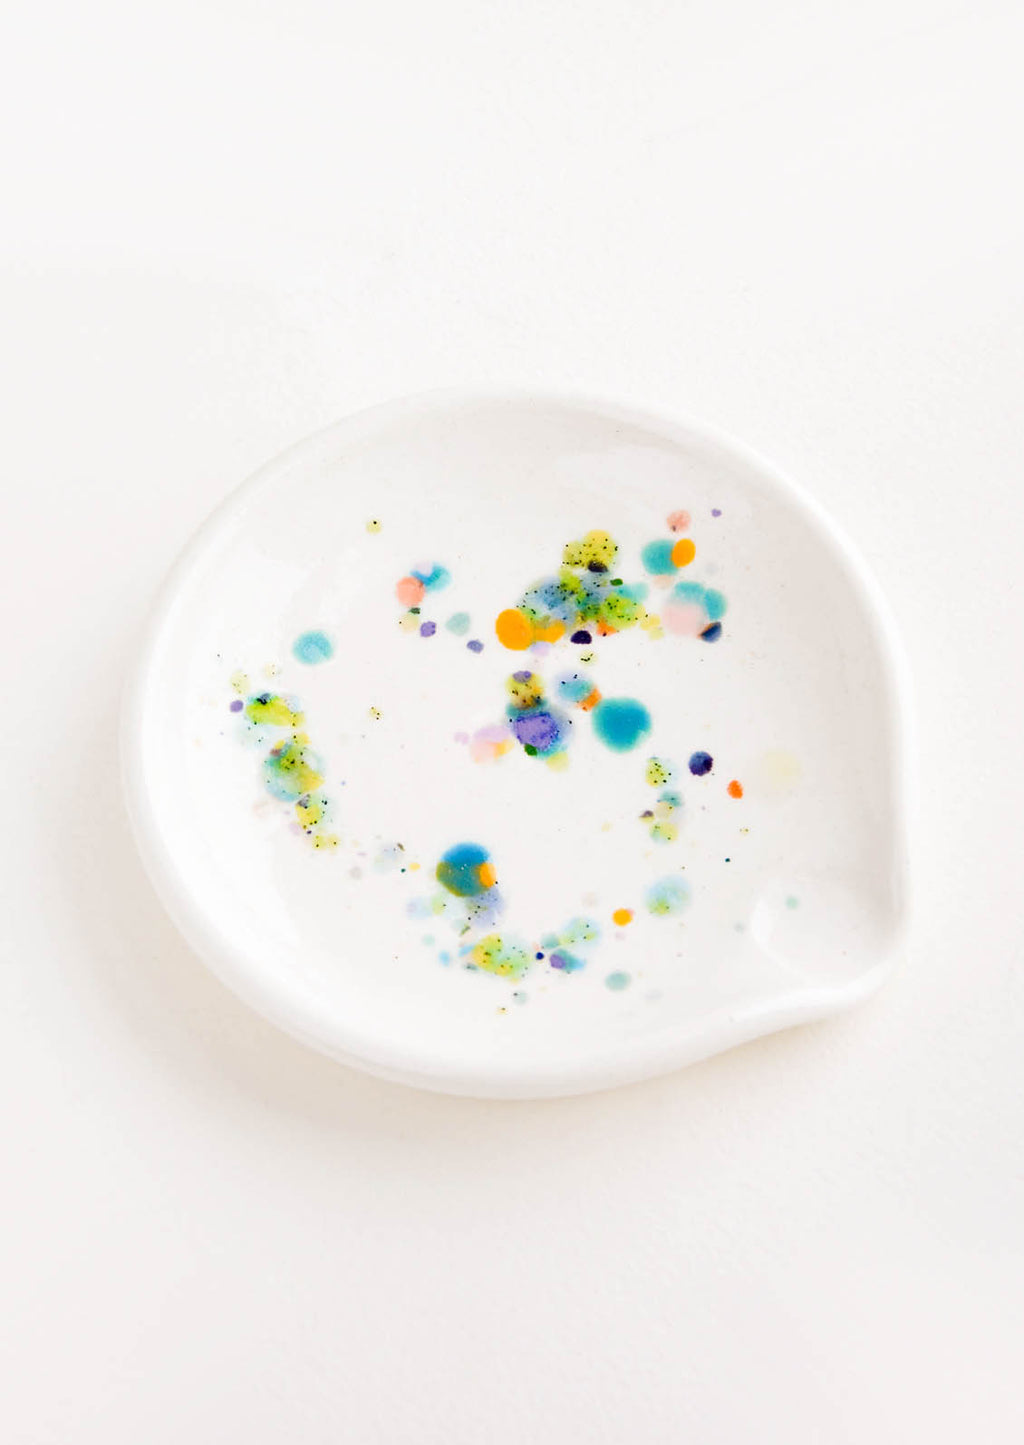 1: A round ceramic spoon rest with random, colorful glaze drips.